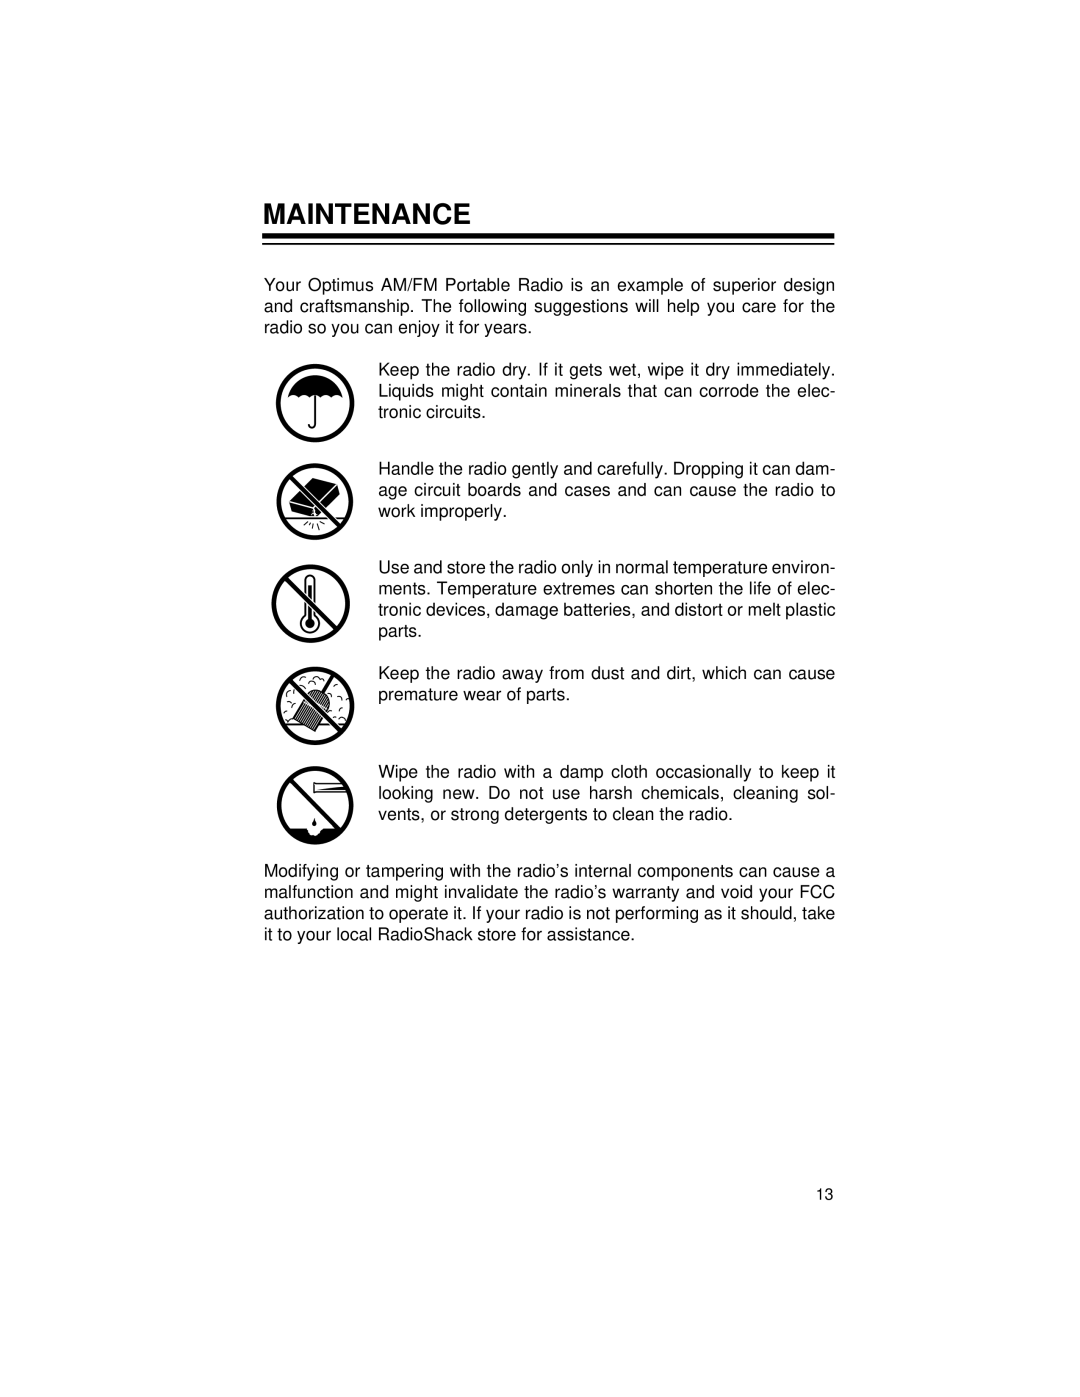 Radio Shack Radio owner manual Maintenance 